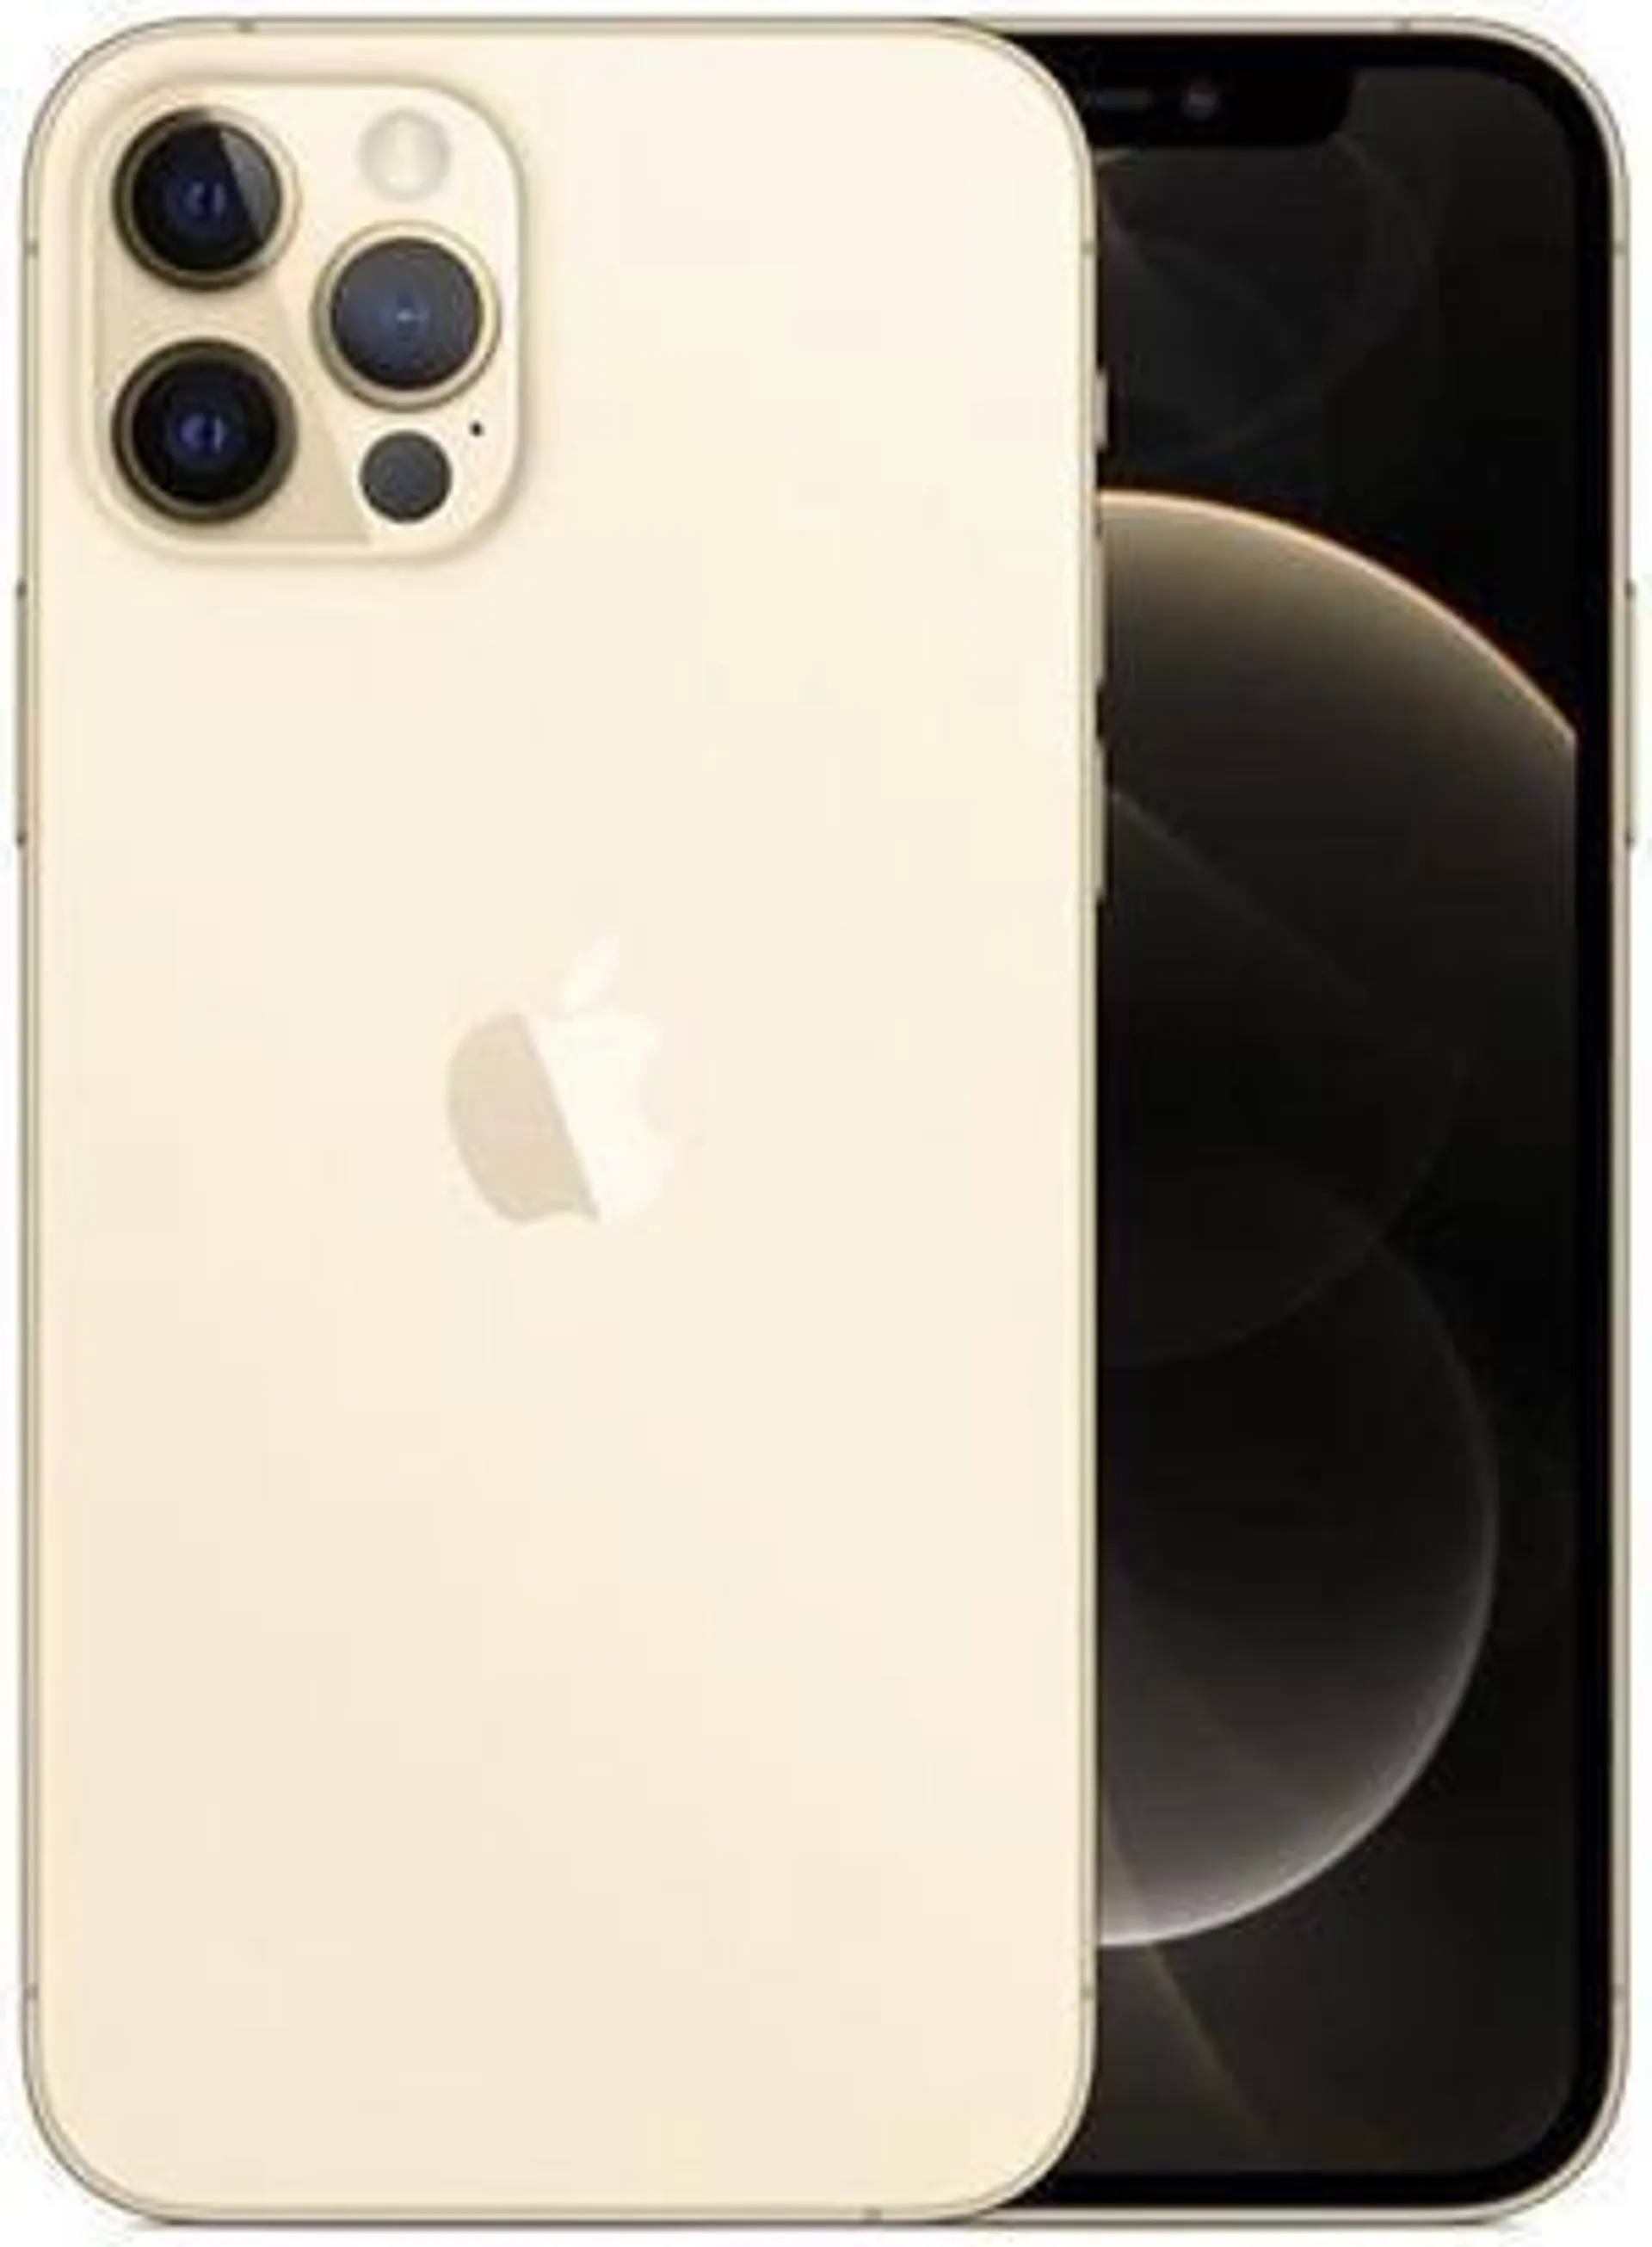 Apple iPhone 12 Pro 128GB Gold - MGLQ3LL/A -Grade A